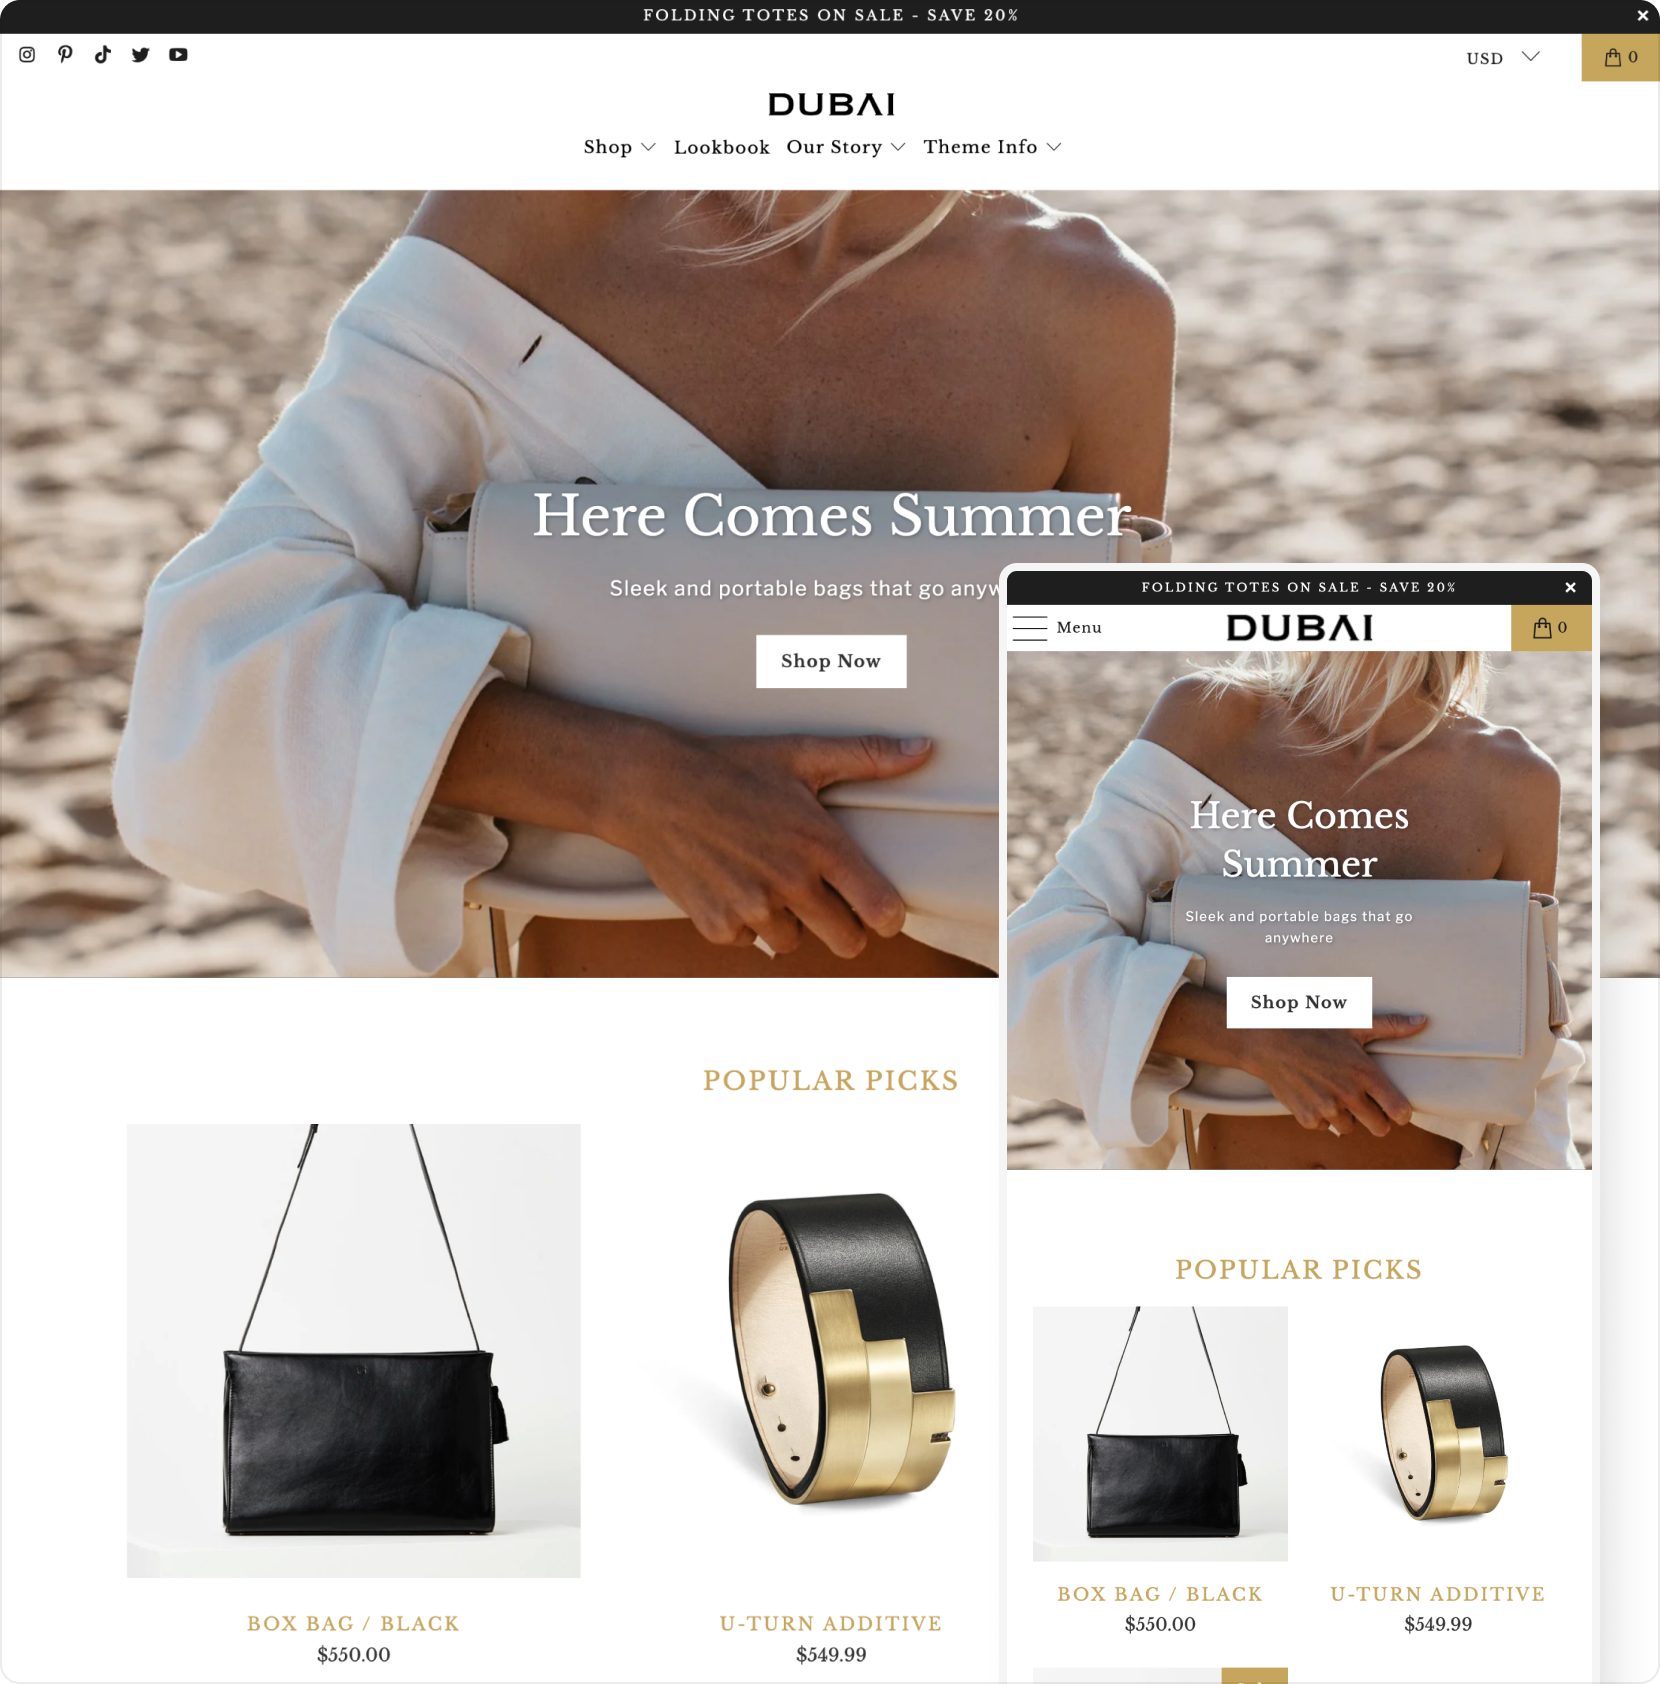 turbo shopify theme dubai theme style home page shown desktop and mobile devices